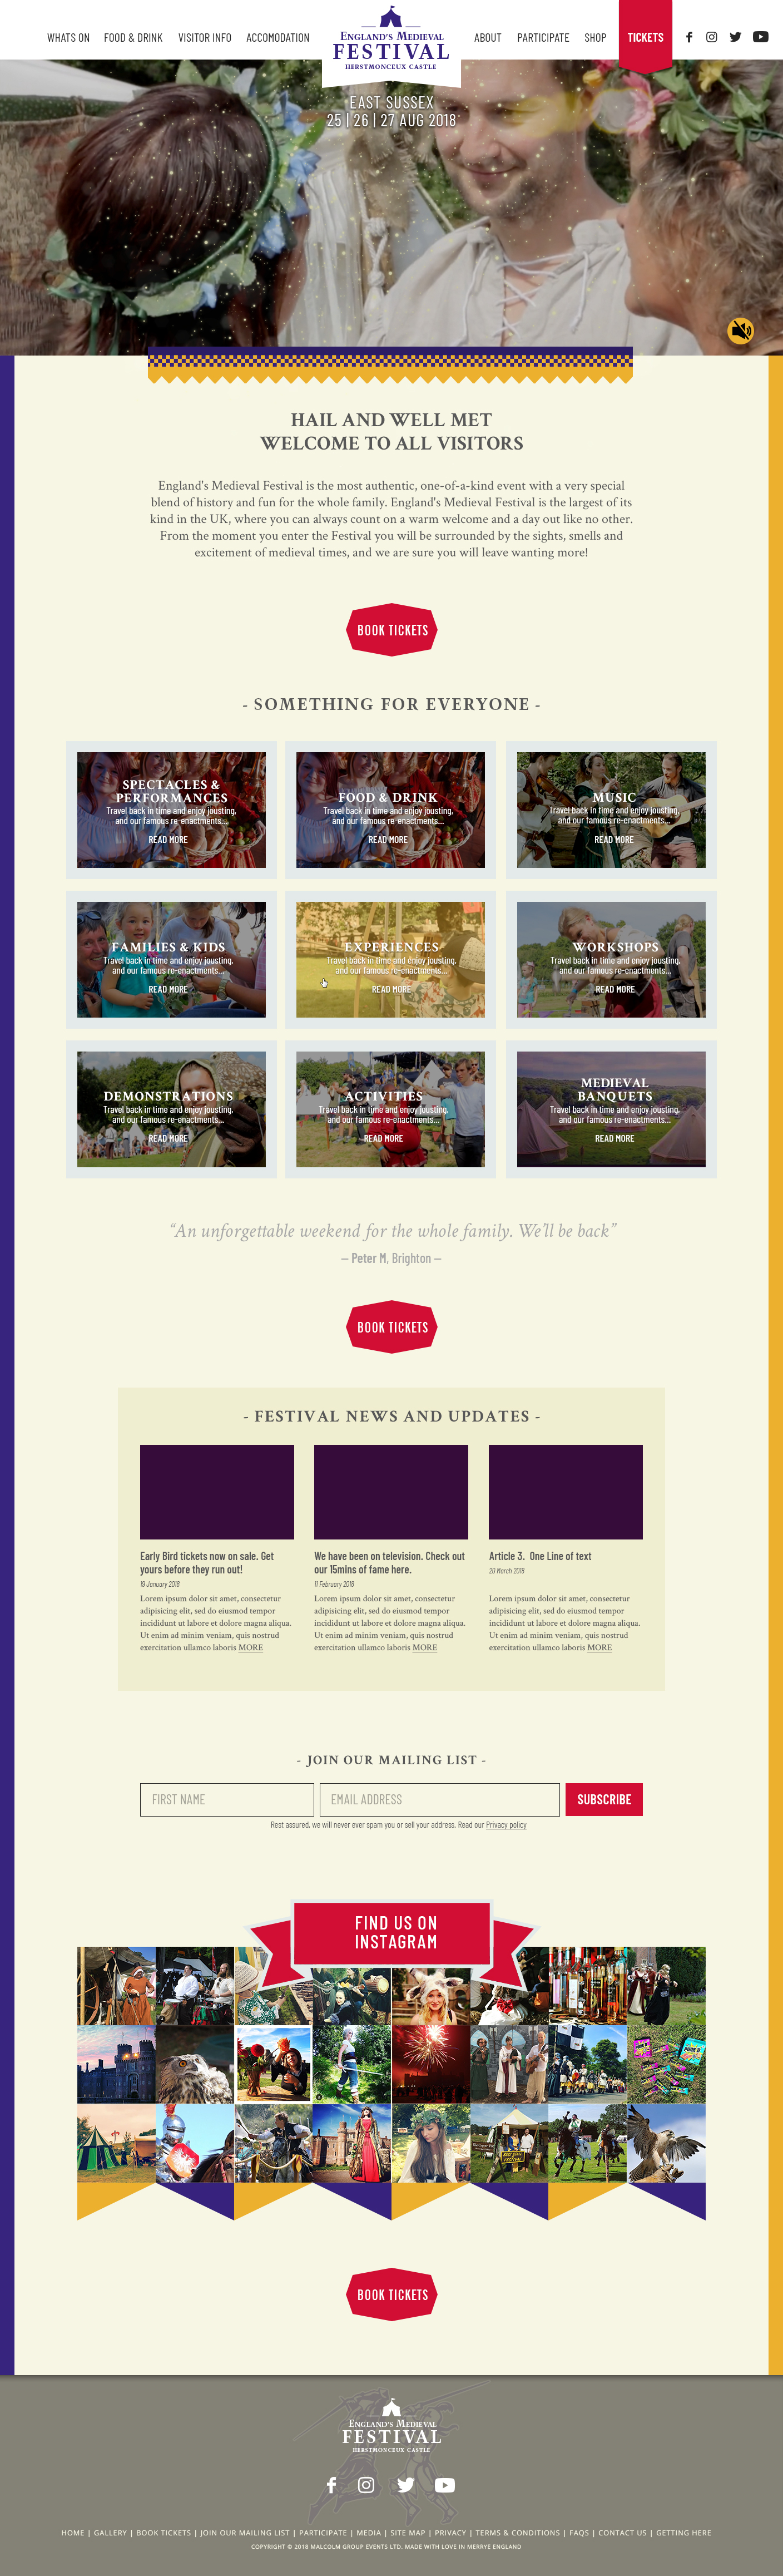 English Medieval Festival : Re-Branding & Website design